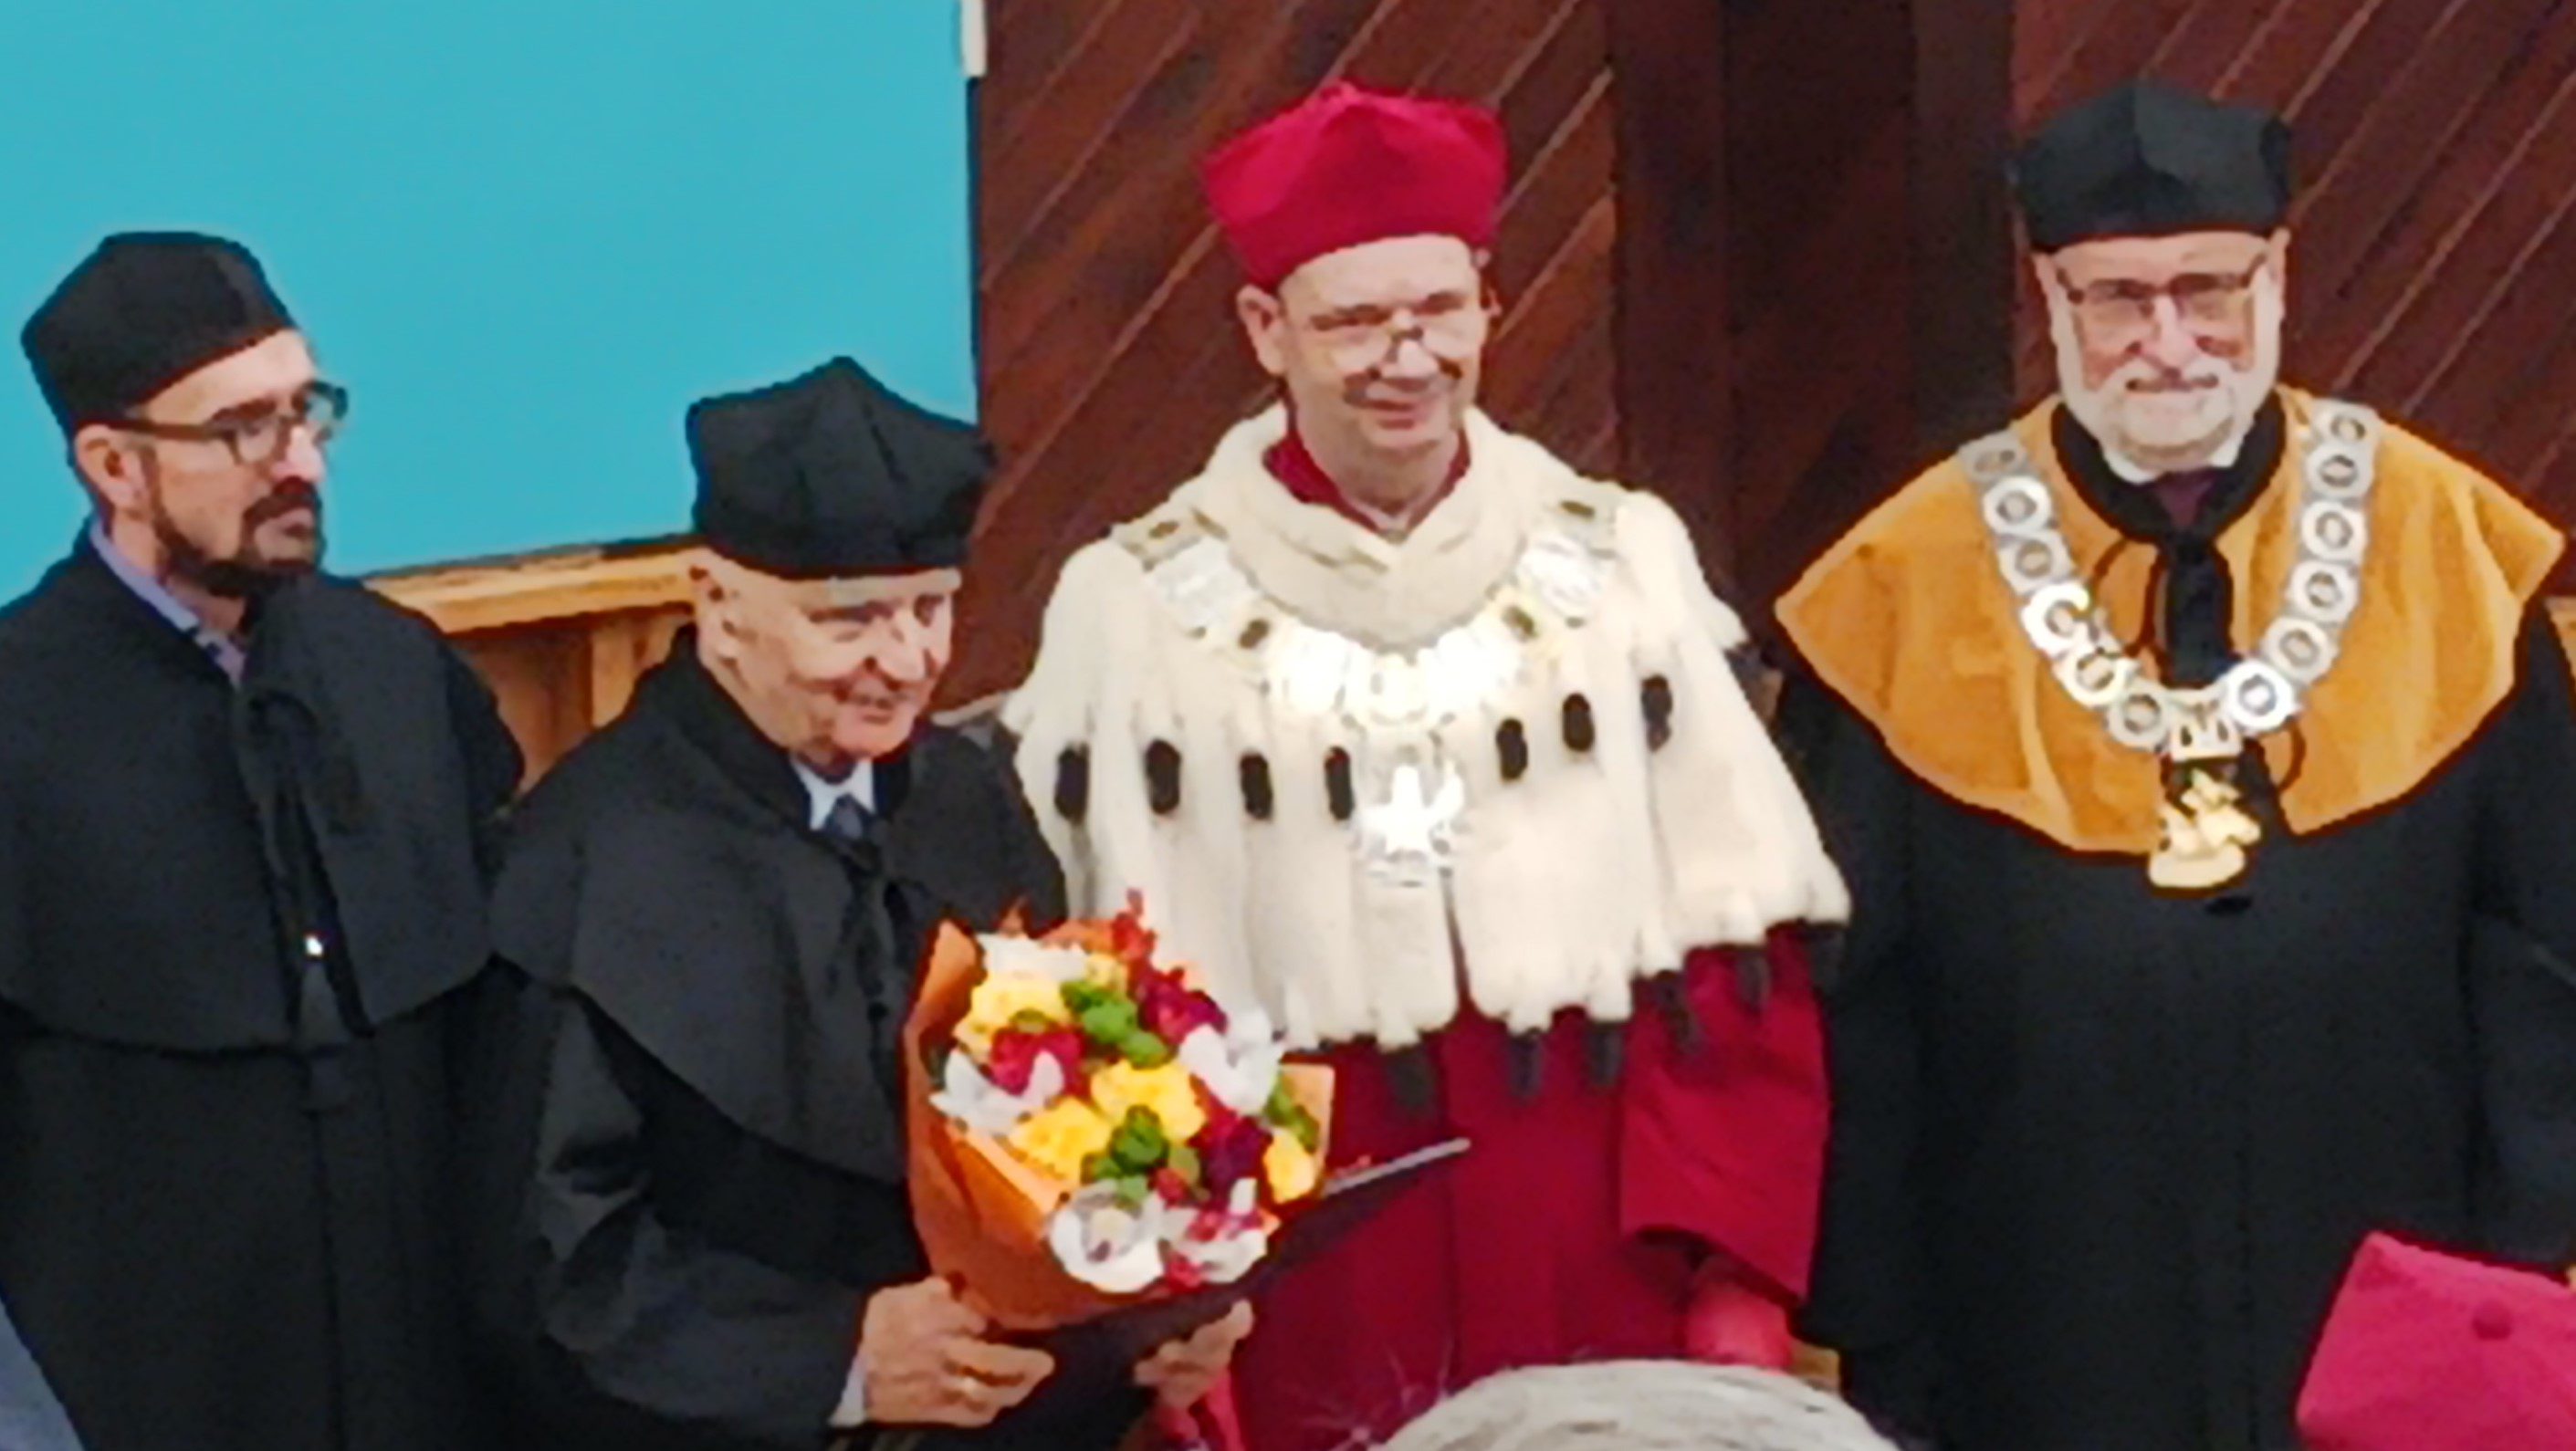 doktorat honoris causa dla pana prof. Józefa Orczyka2 k